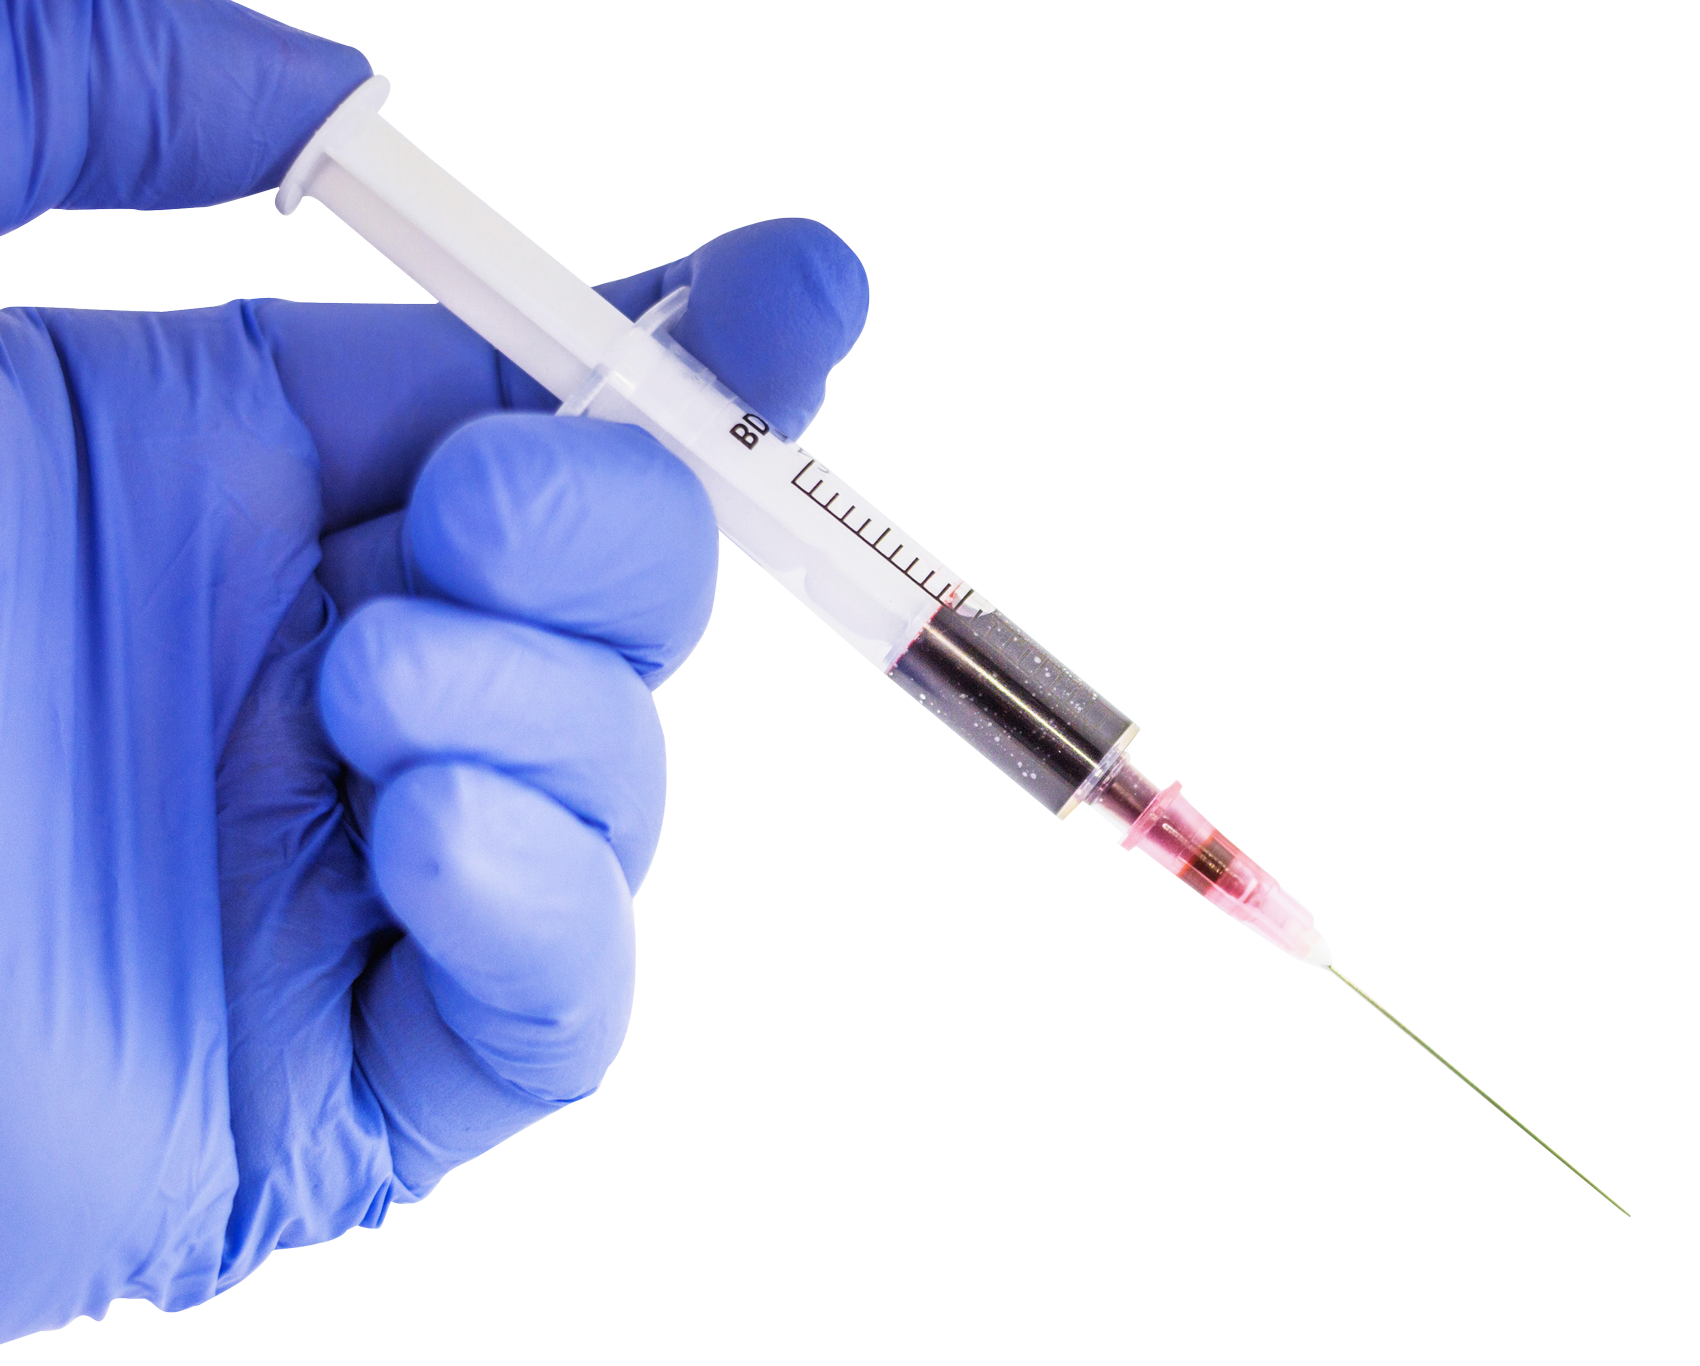 Medicine clipart needle. Syringe png image purepng